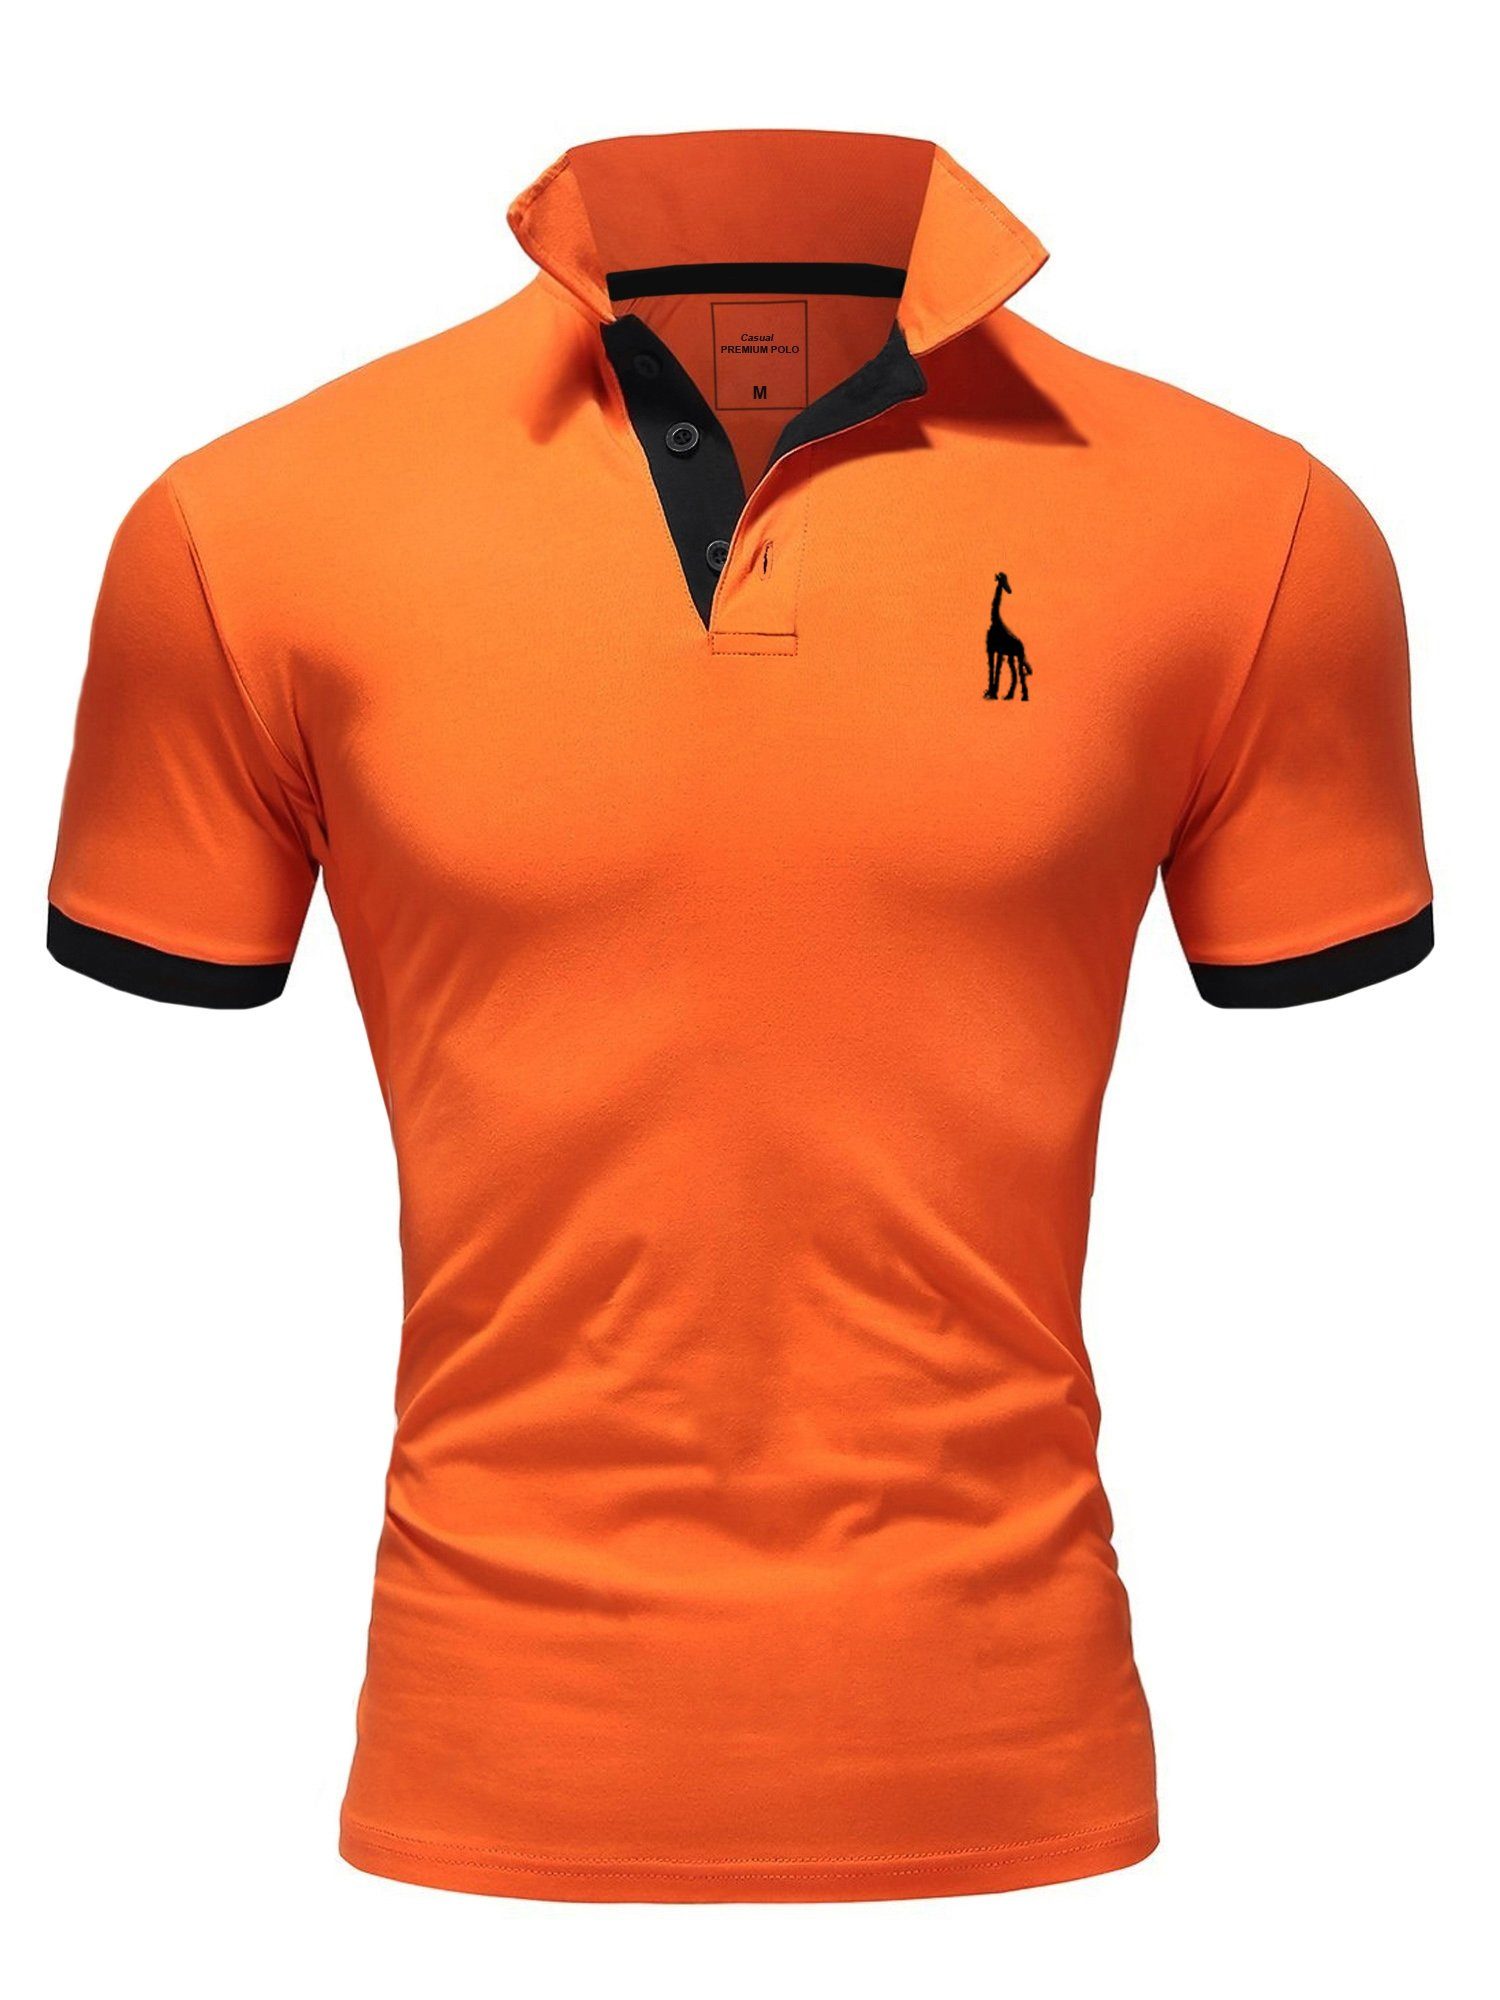 REPUBLIX Poloshirt JOSEPH Herren Basic Kurzarm Kontrast Polo Hemd Orange/Schwarz